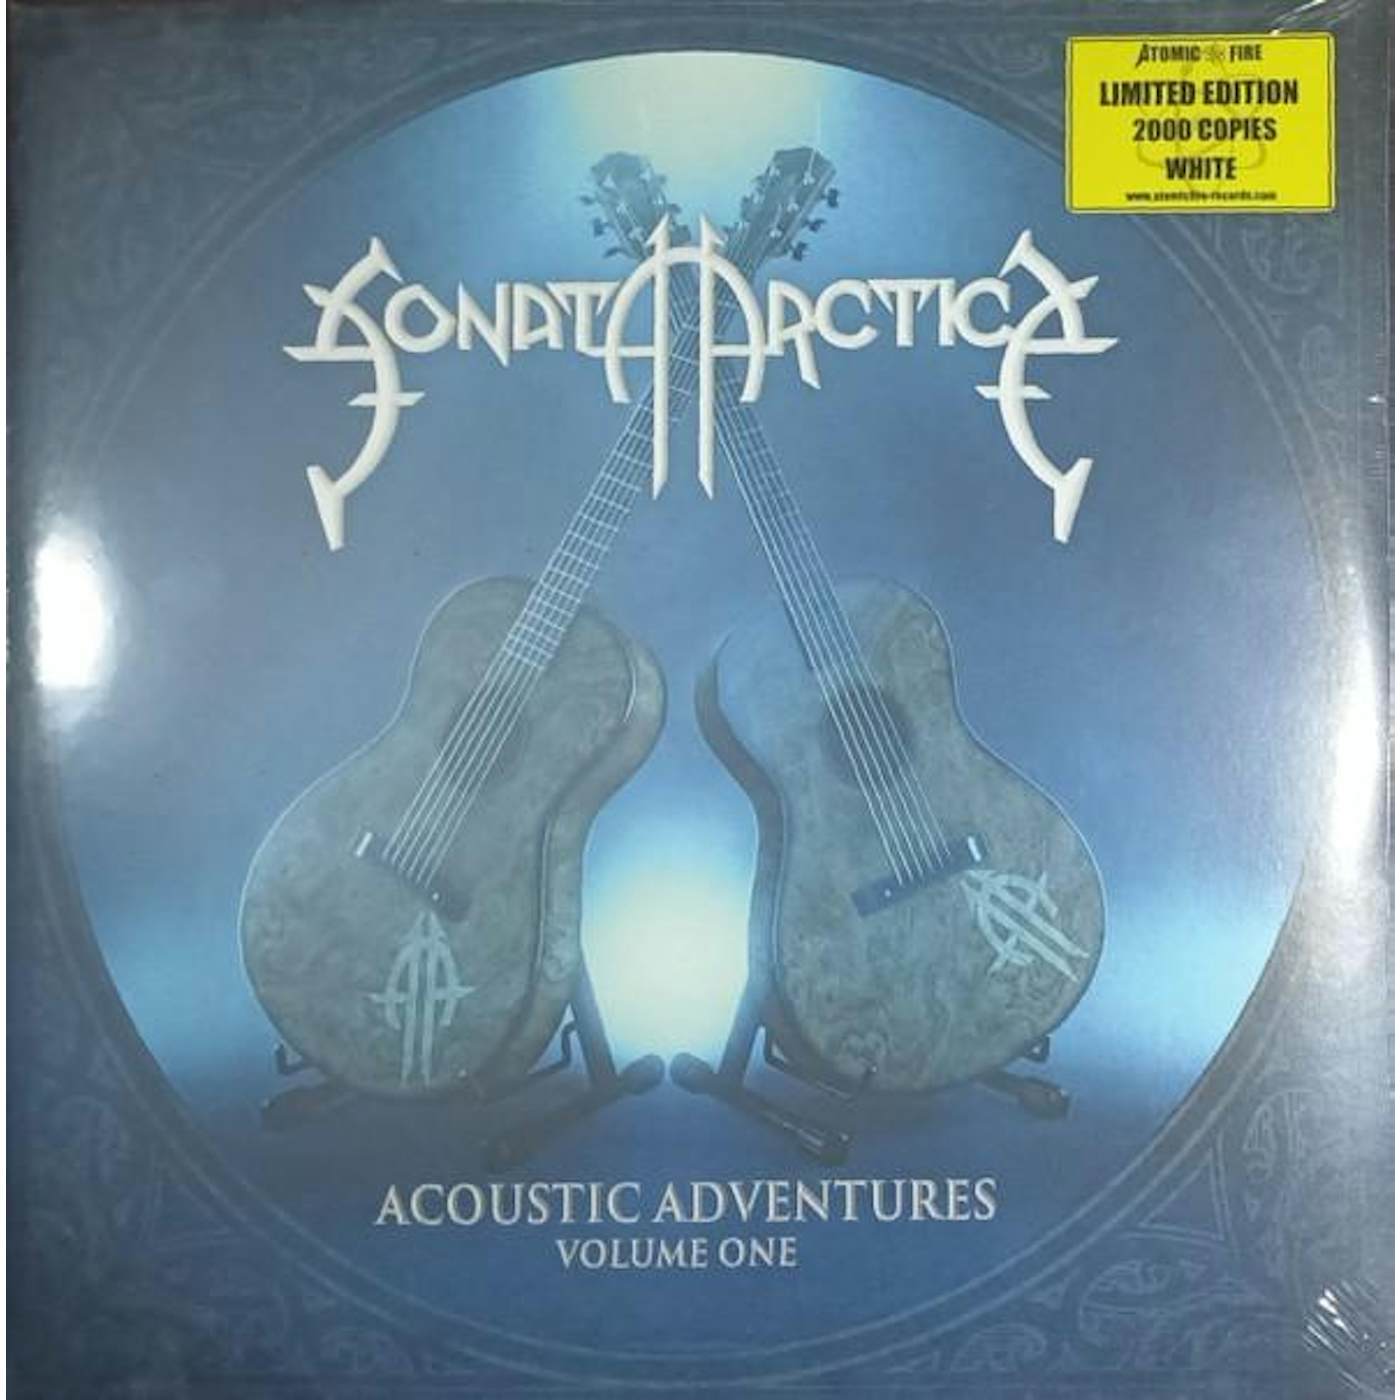 Sonata Arctica ACOUSTIC ADVENTURES Vinyl Record